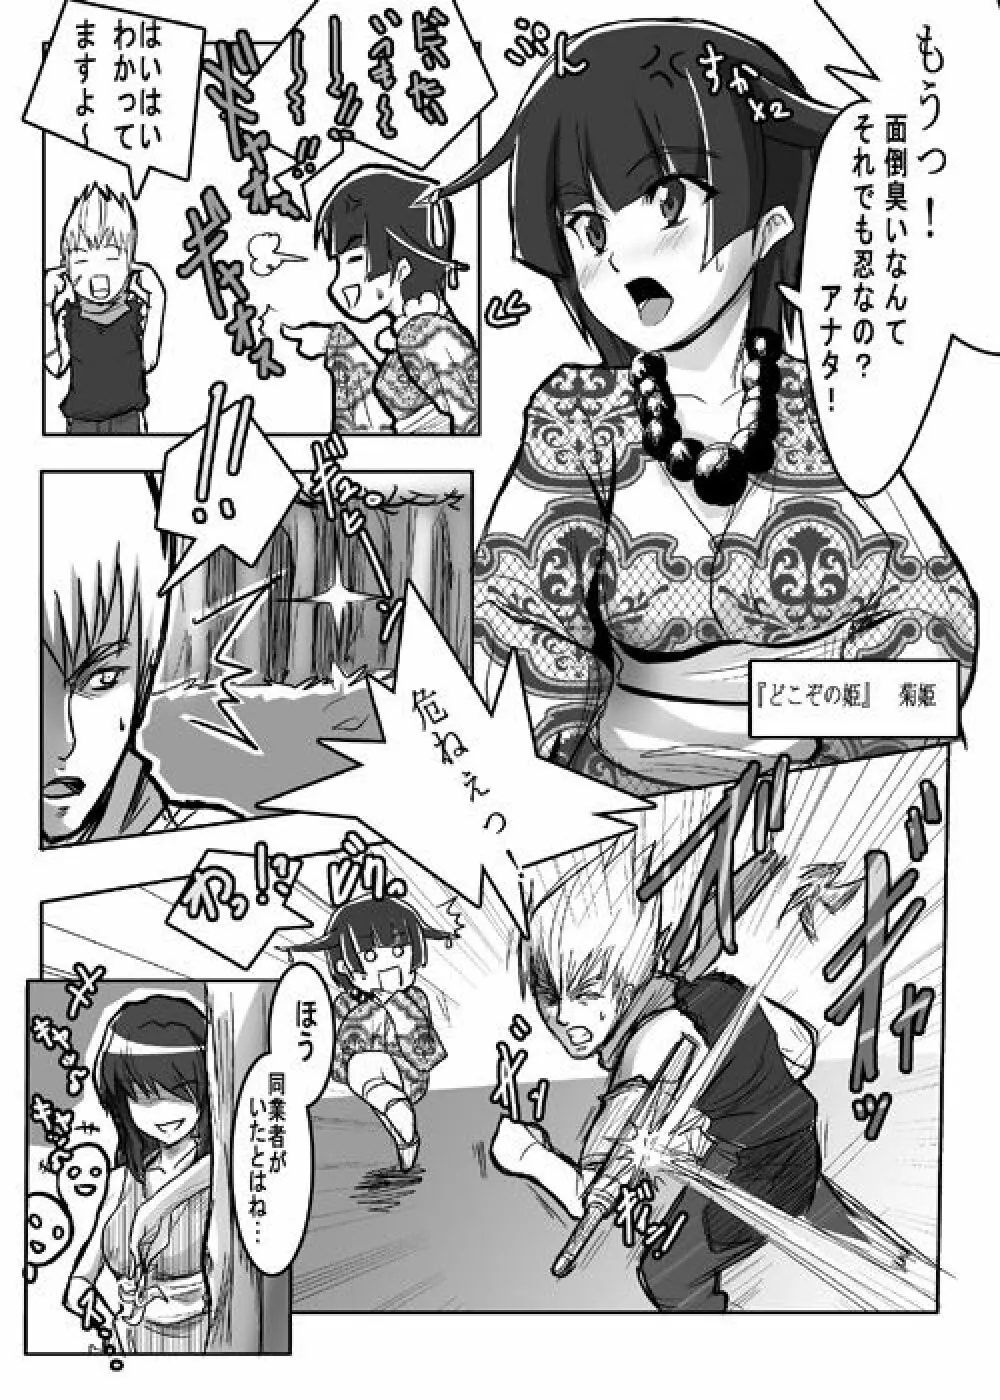 Same-themed manga about kid fighting female ninjas from japanese imageboard. 50ページ